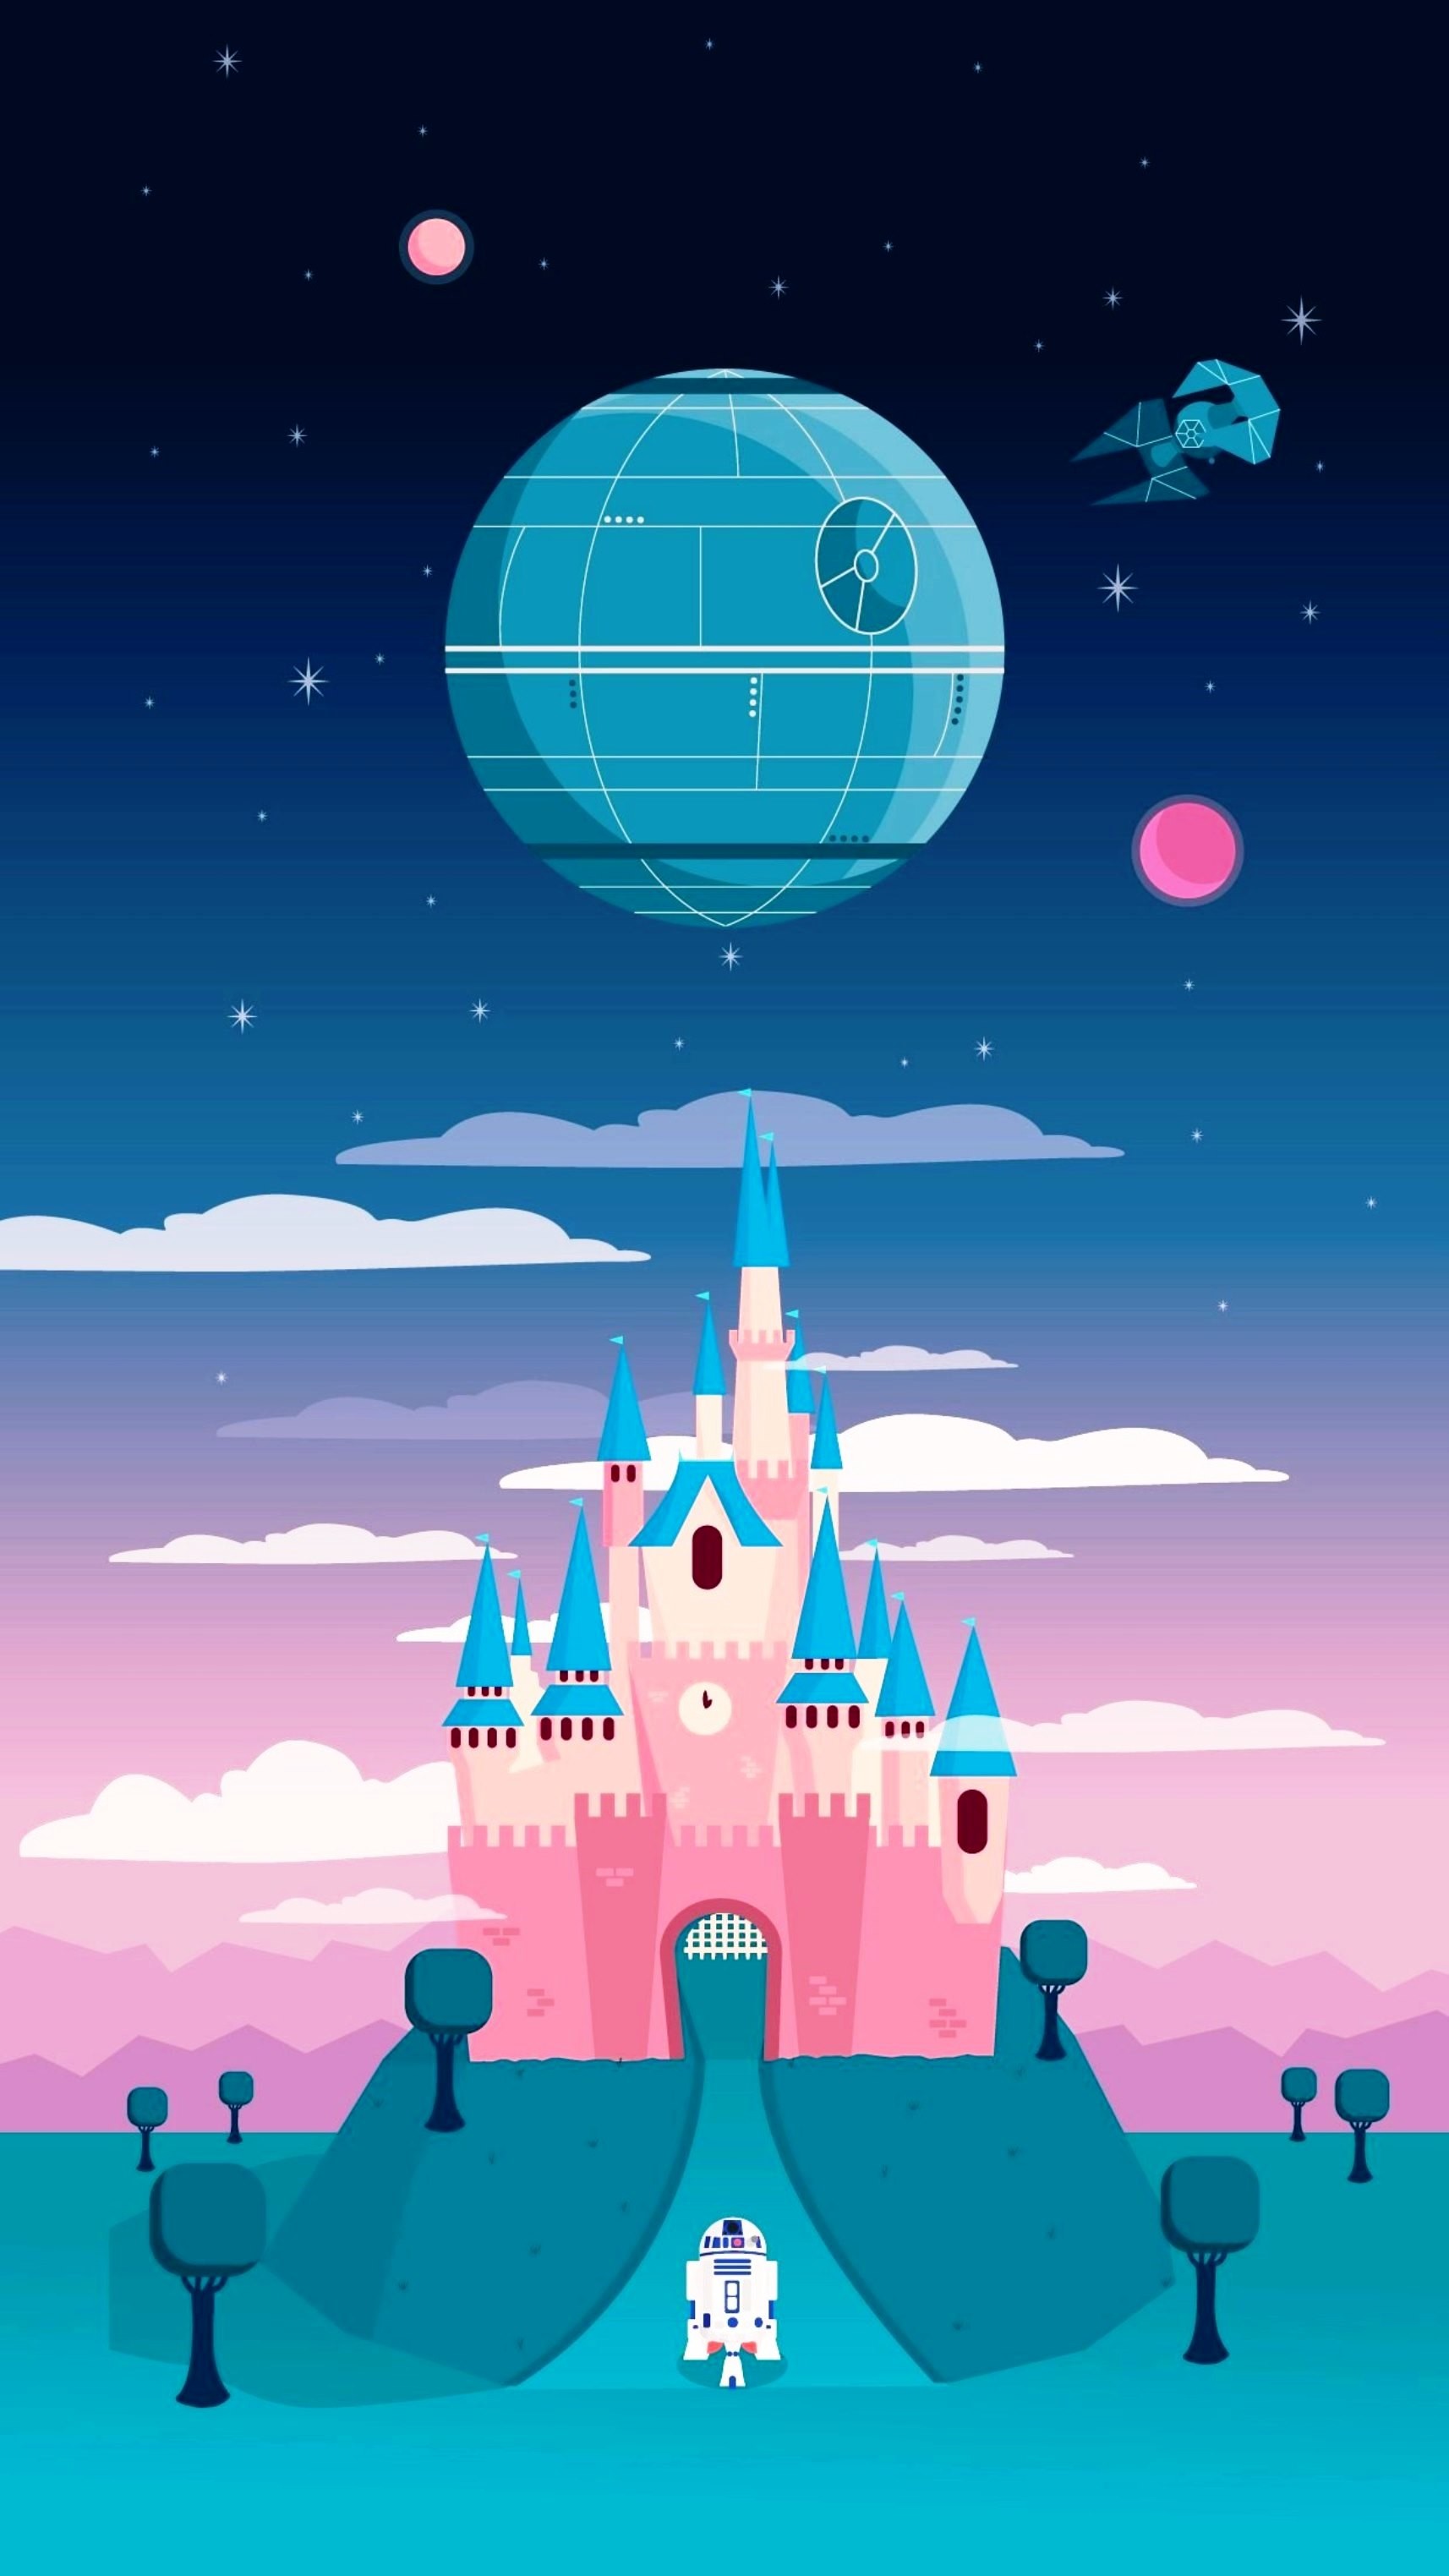 Best ideas about Disney wallpaper on Pinterest Disney